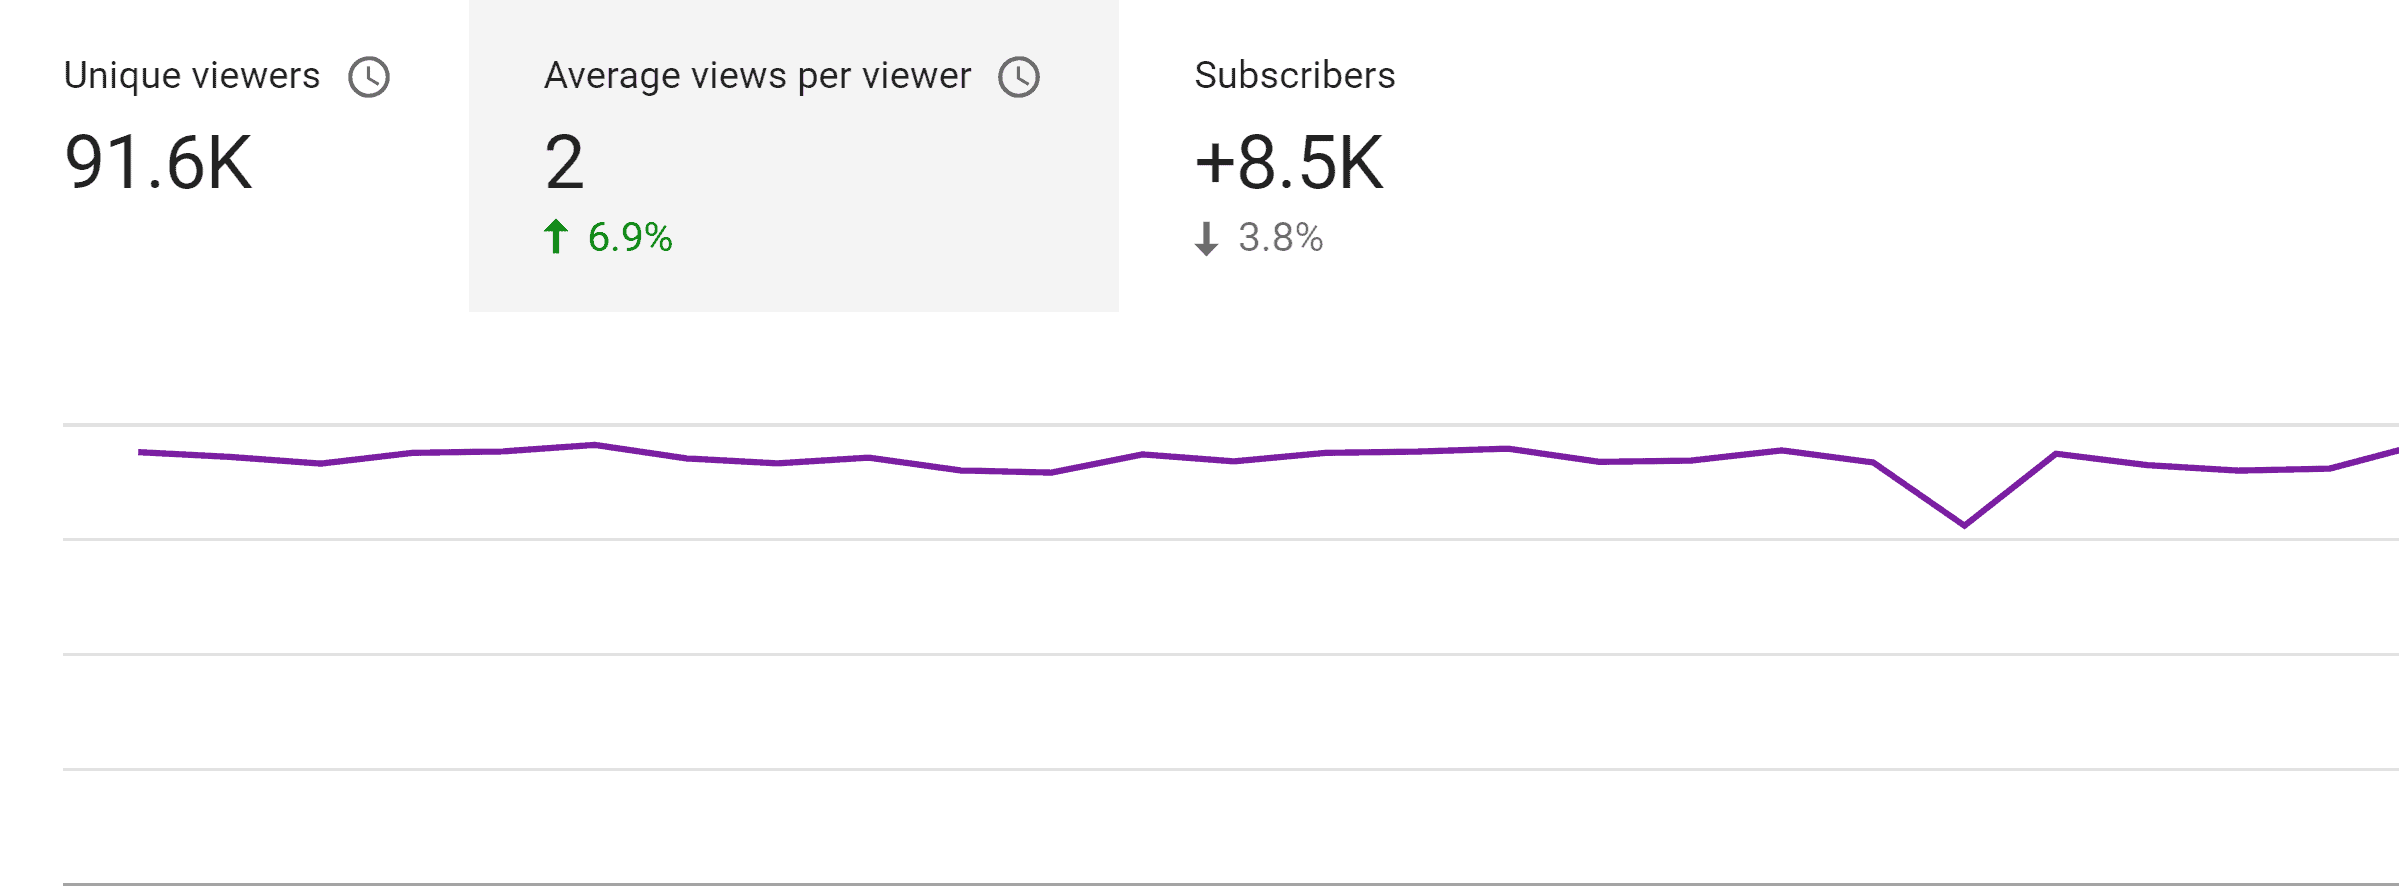 Average views per viewer